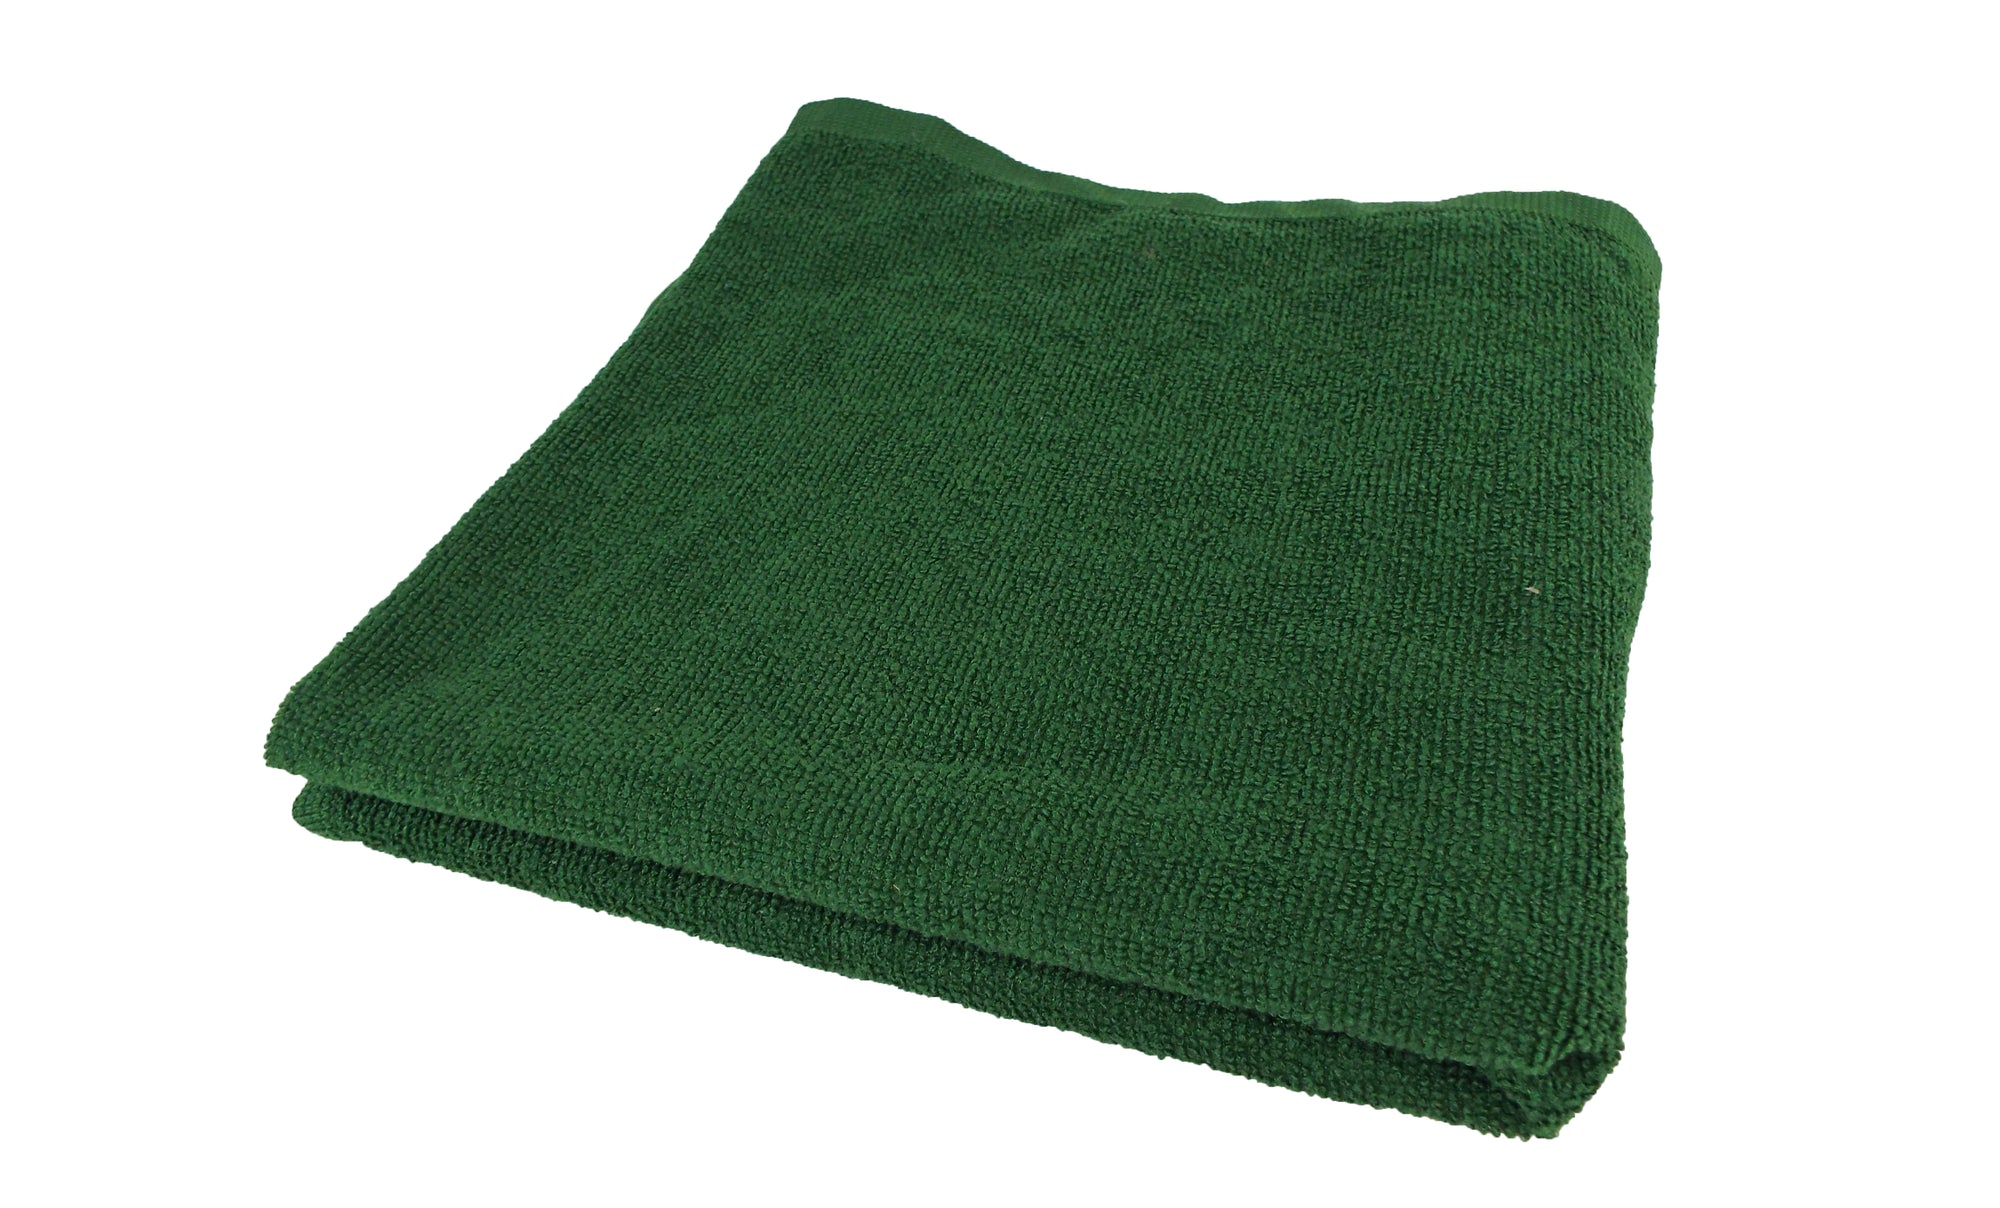 British Army - Small Green Hand Towel - Grade 1